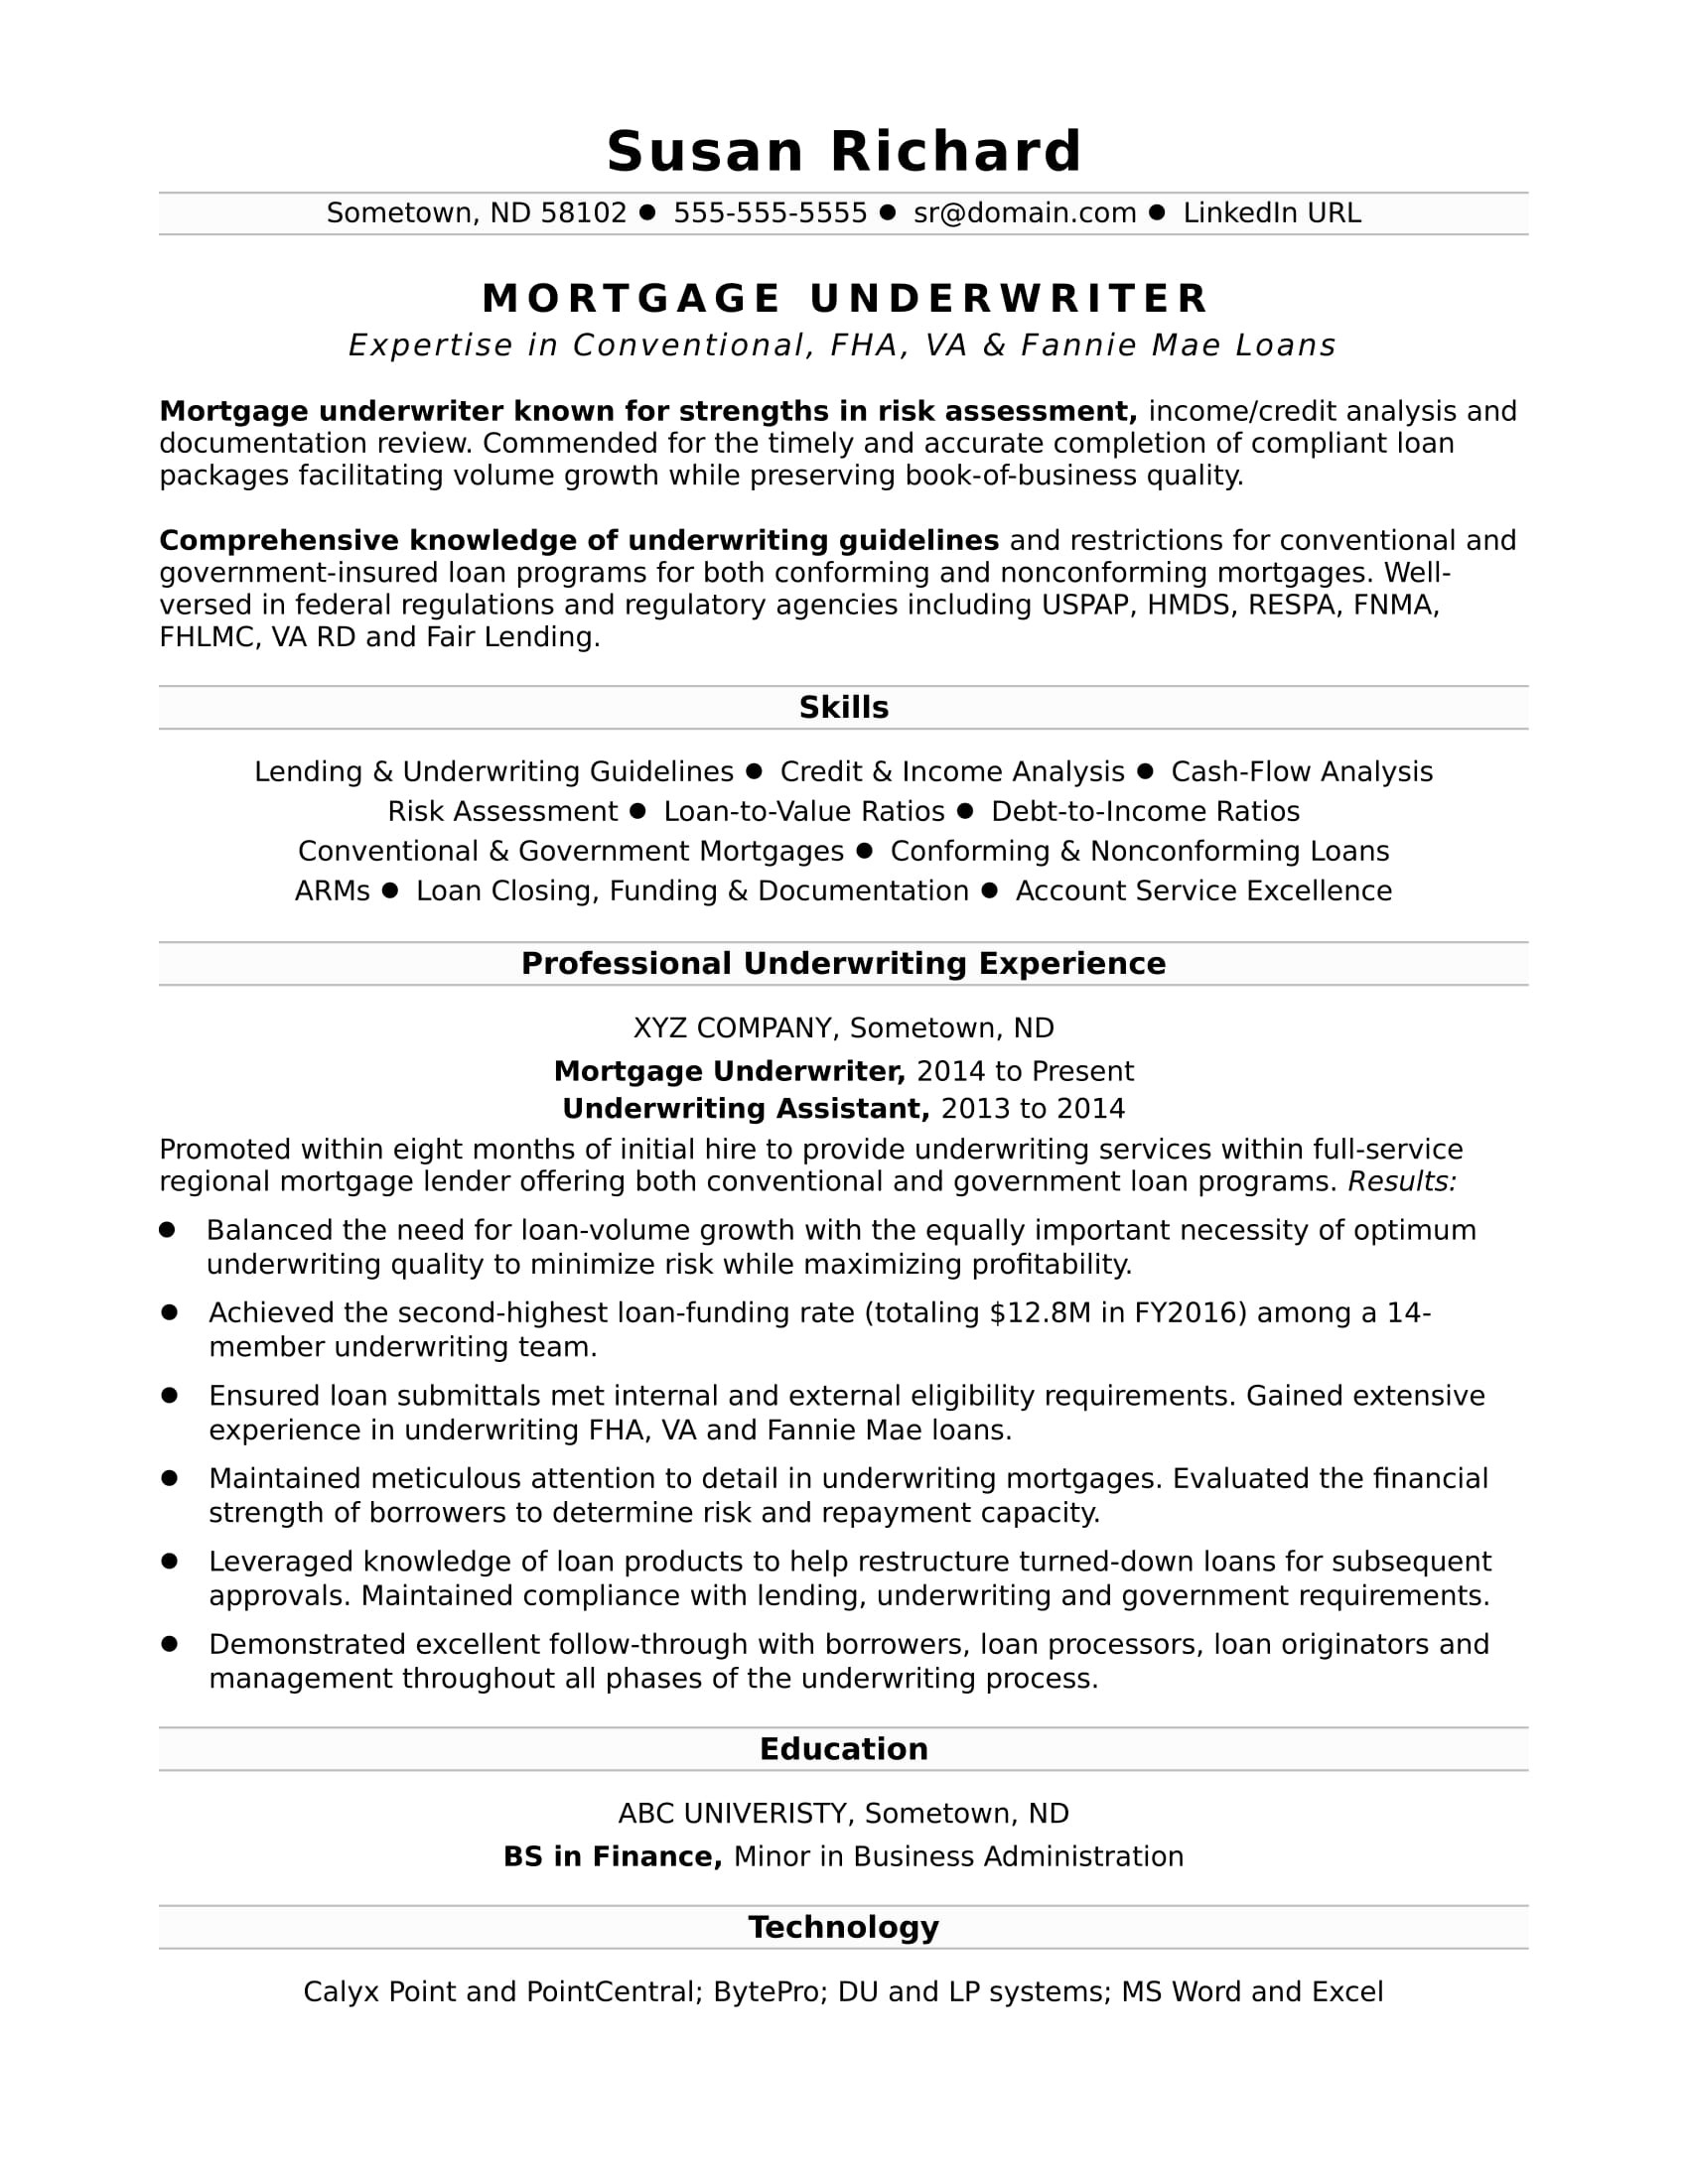 Sample Cover Letter for Mortgage Underwriter Resume Mortgage Underwriter Resume Sample Monster.com